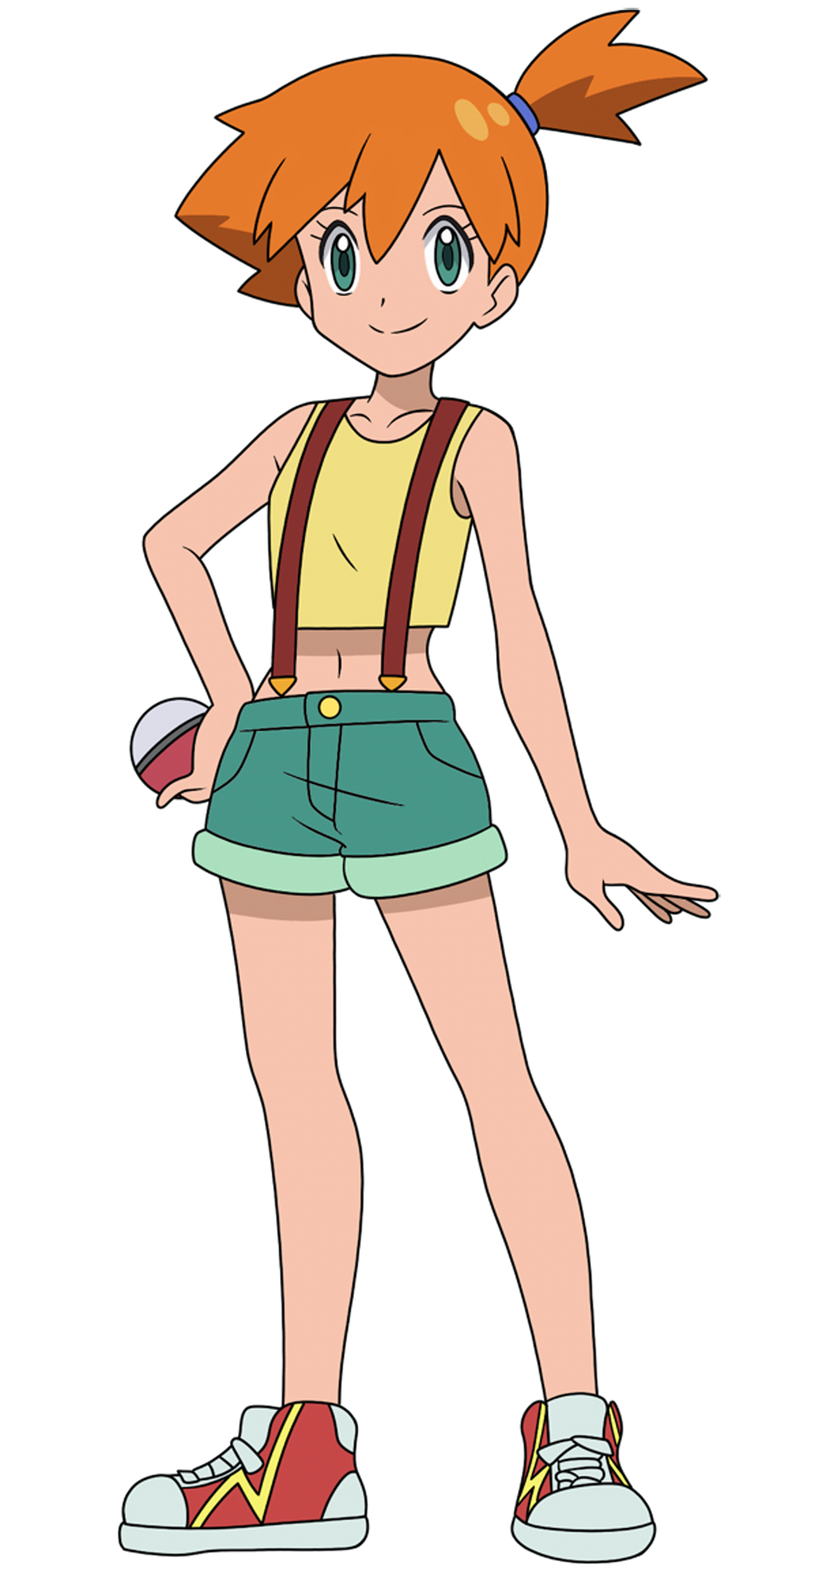 Misty (anime), Pokémon Wiki